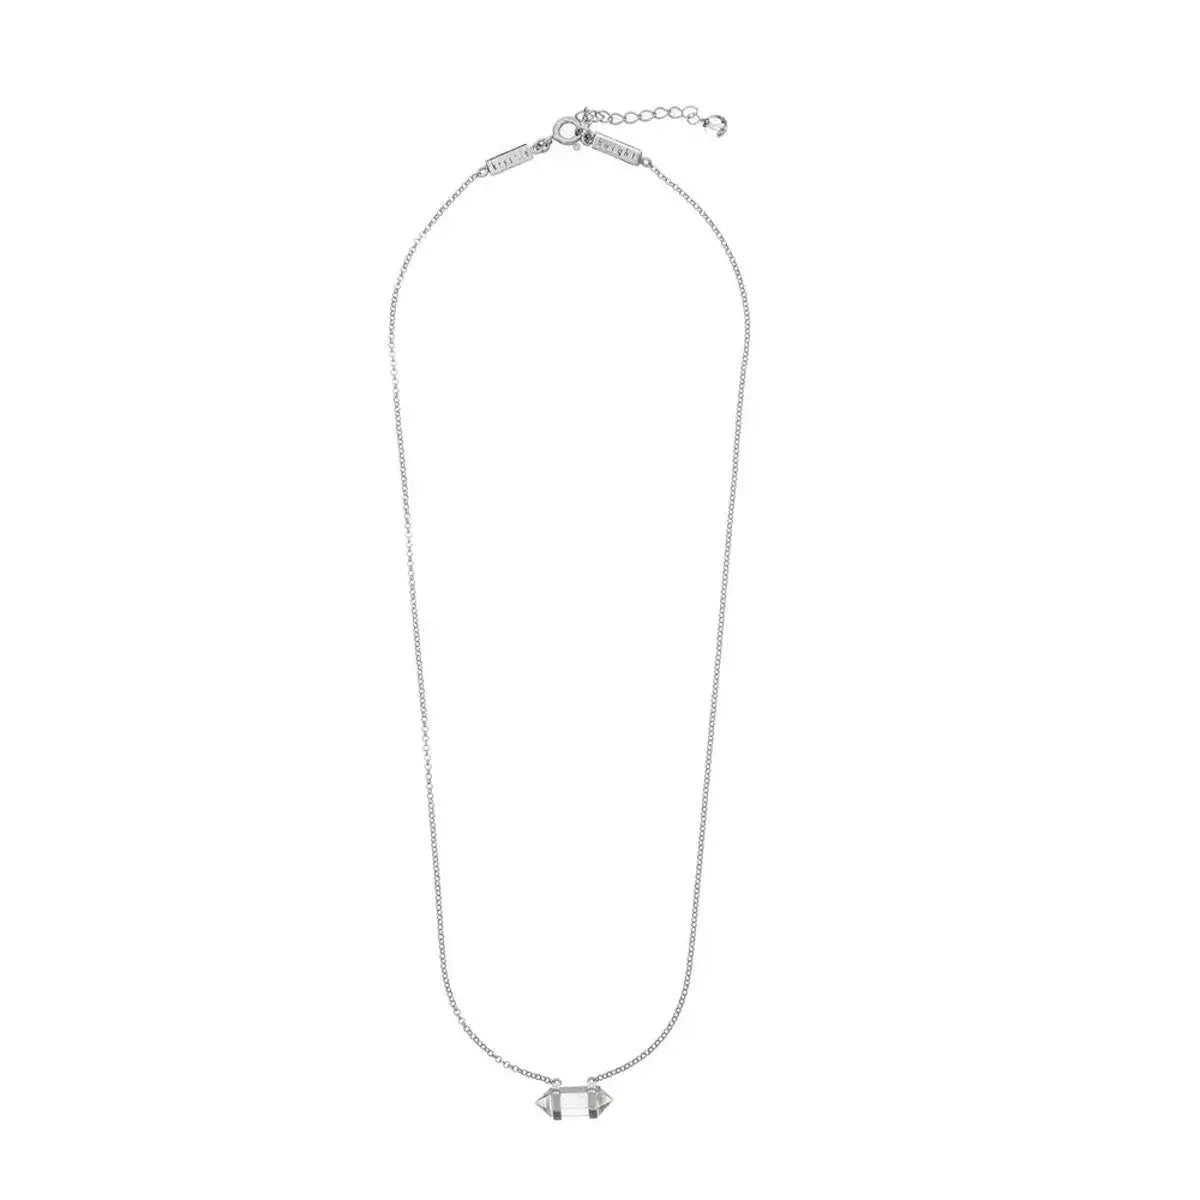 Teeny Tiny Mini Healing Necklace by Krystle Knight Jewellery - Clear Quartz (Silver)